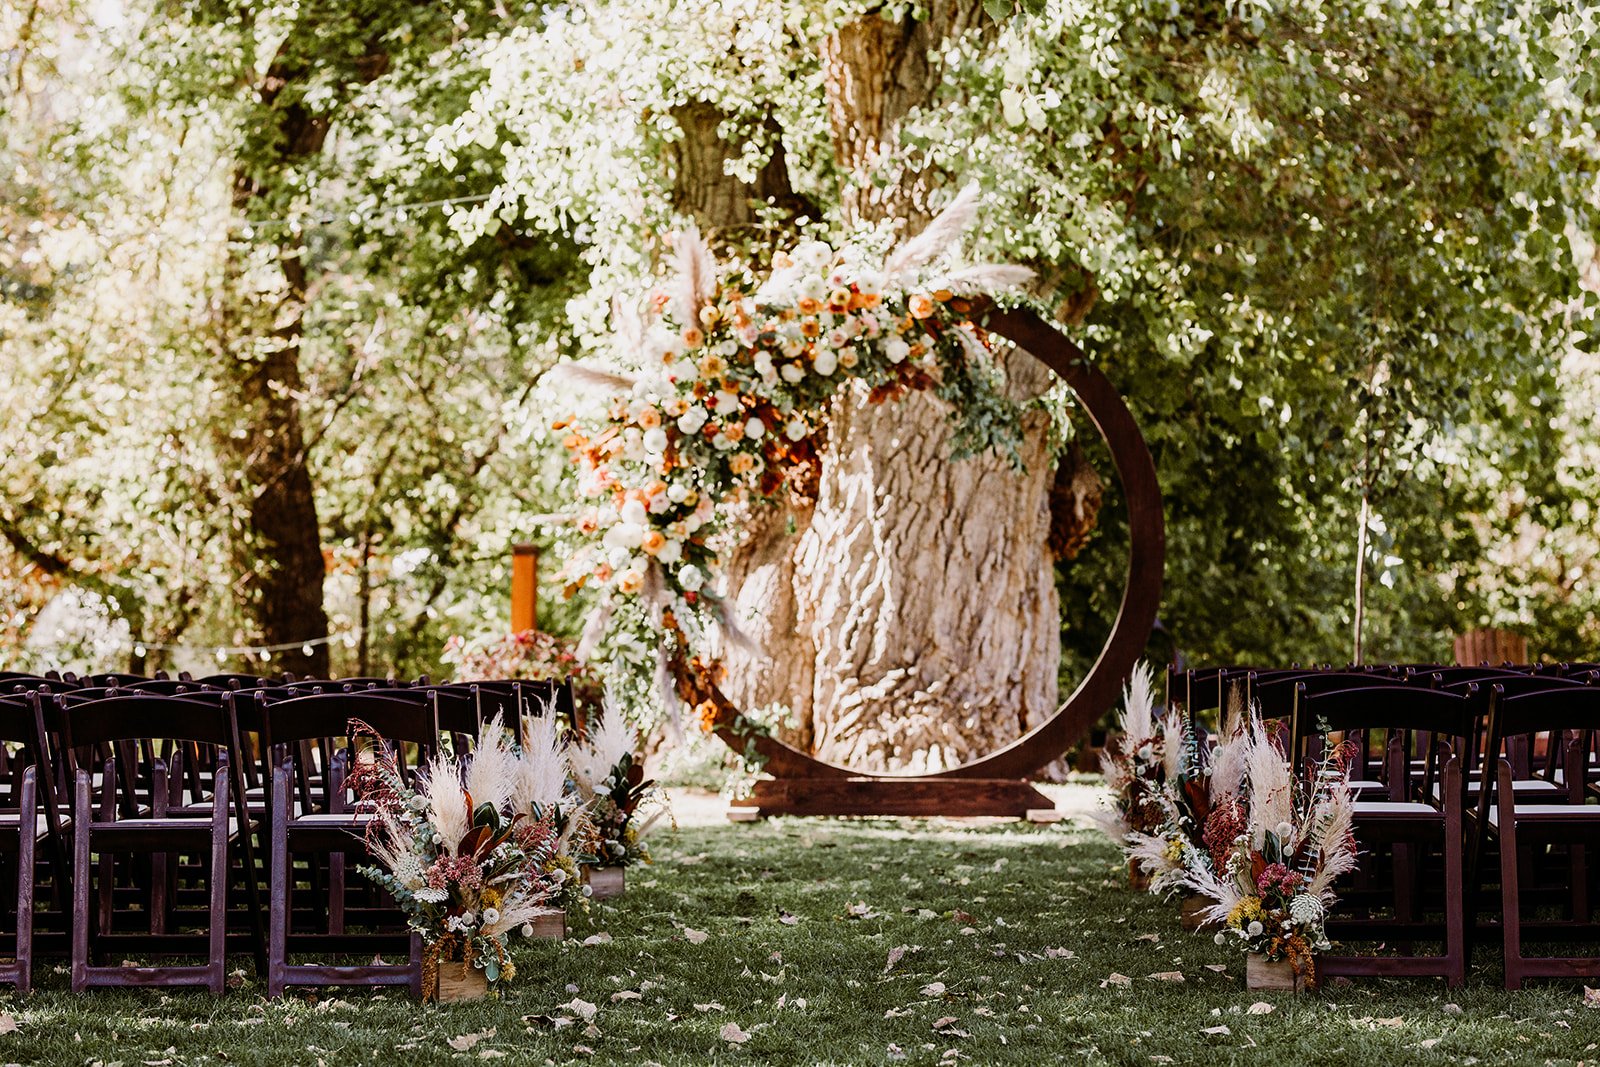 Plume&Furrow-WeddingFlorist-Garrison&Gabriella-TaylerCarlisle-Lyons-Farmette-October-Colorado-Ceremony-Decor-Floral-Arch-Arbor-Pampas-Grass.jpg